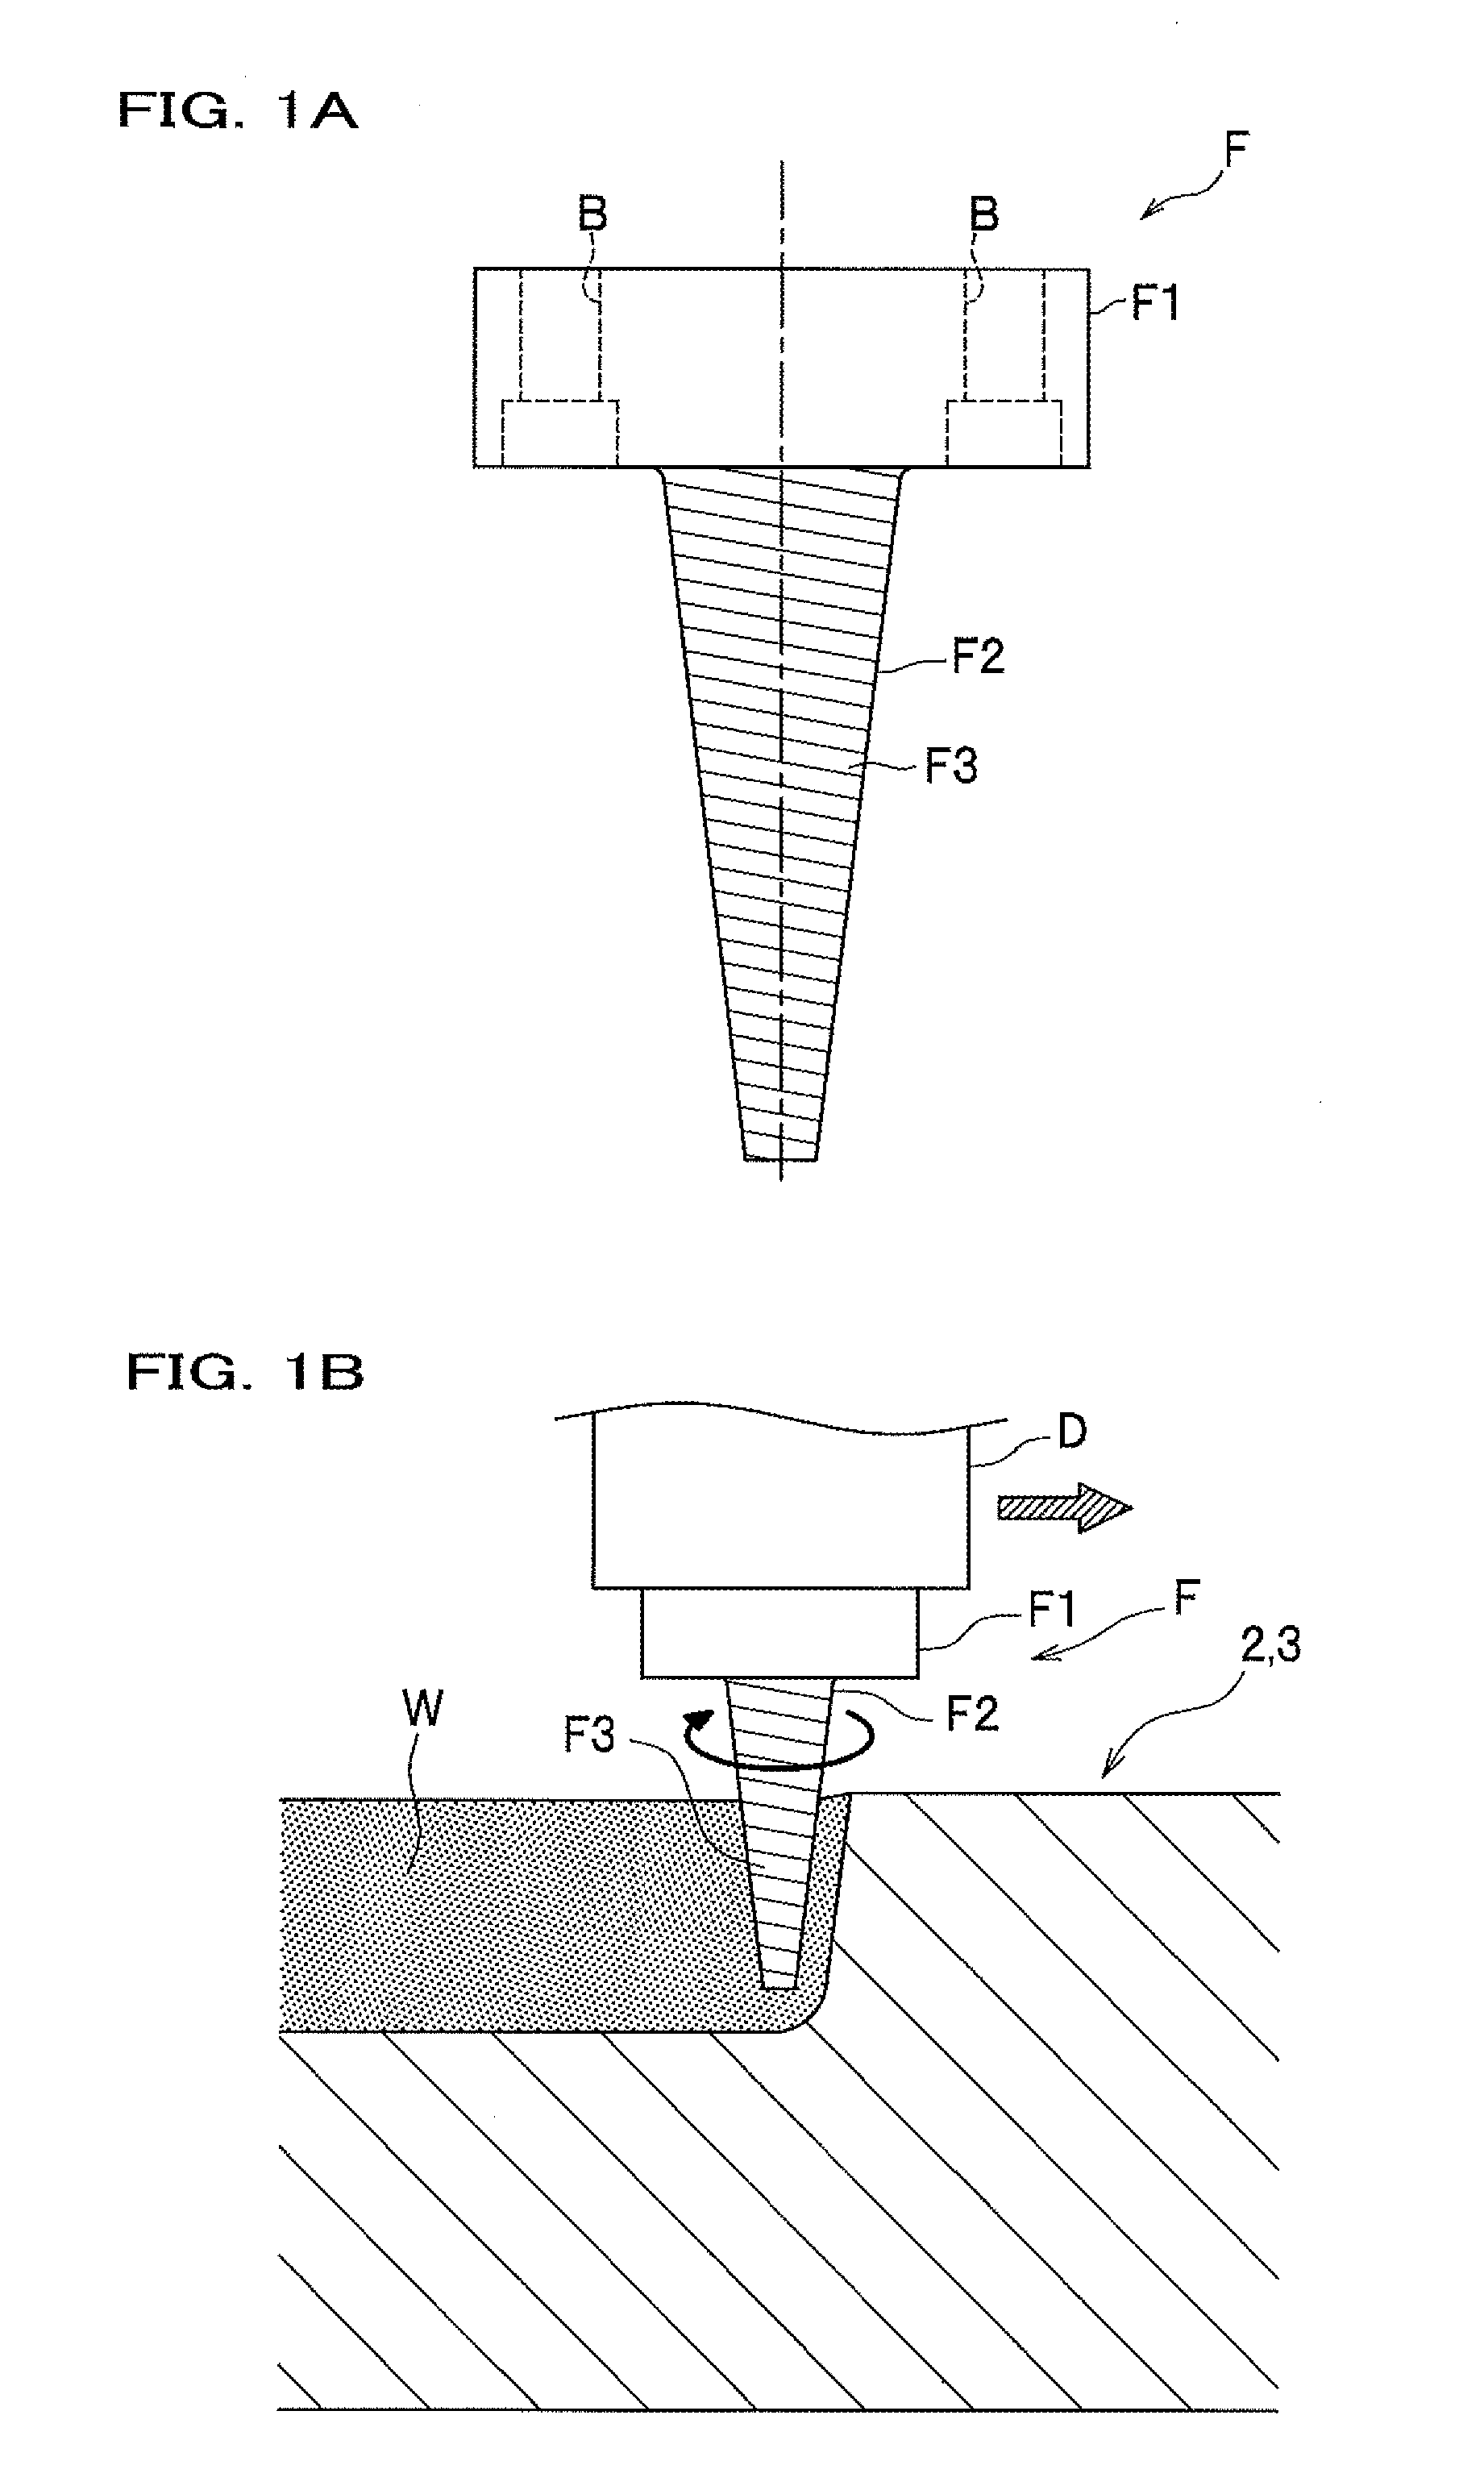 Method of manufacturing liquid-cooled jacket